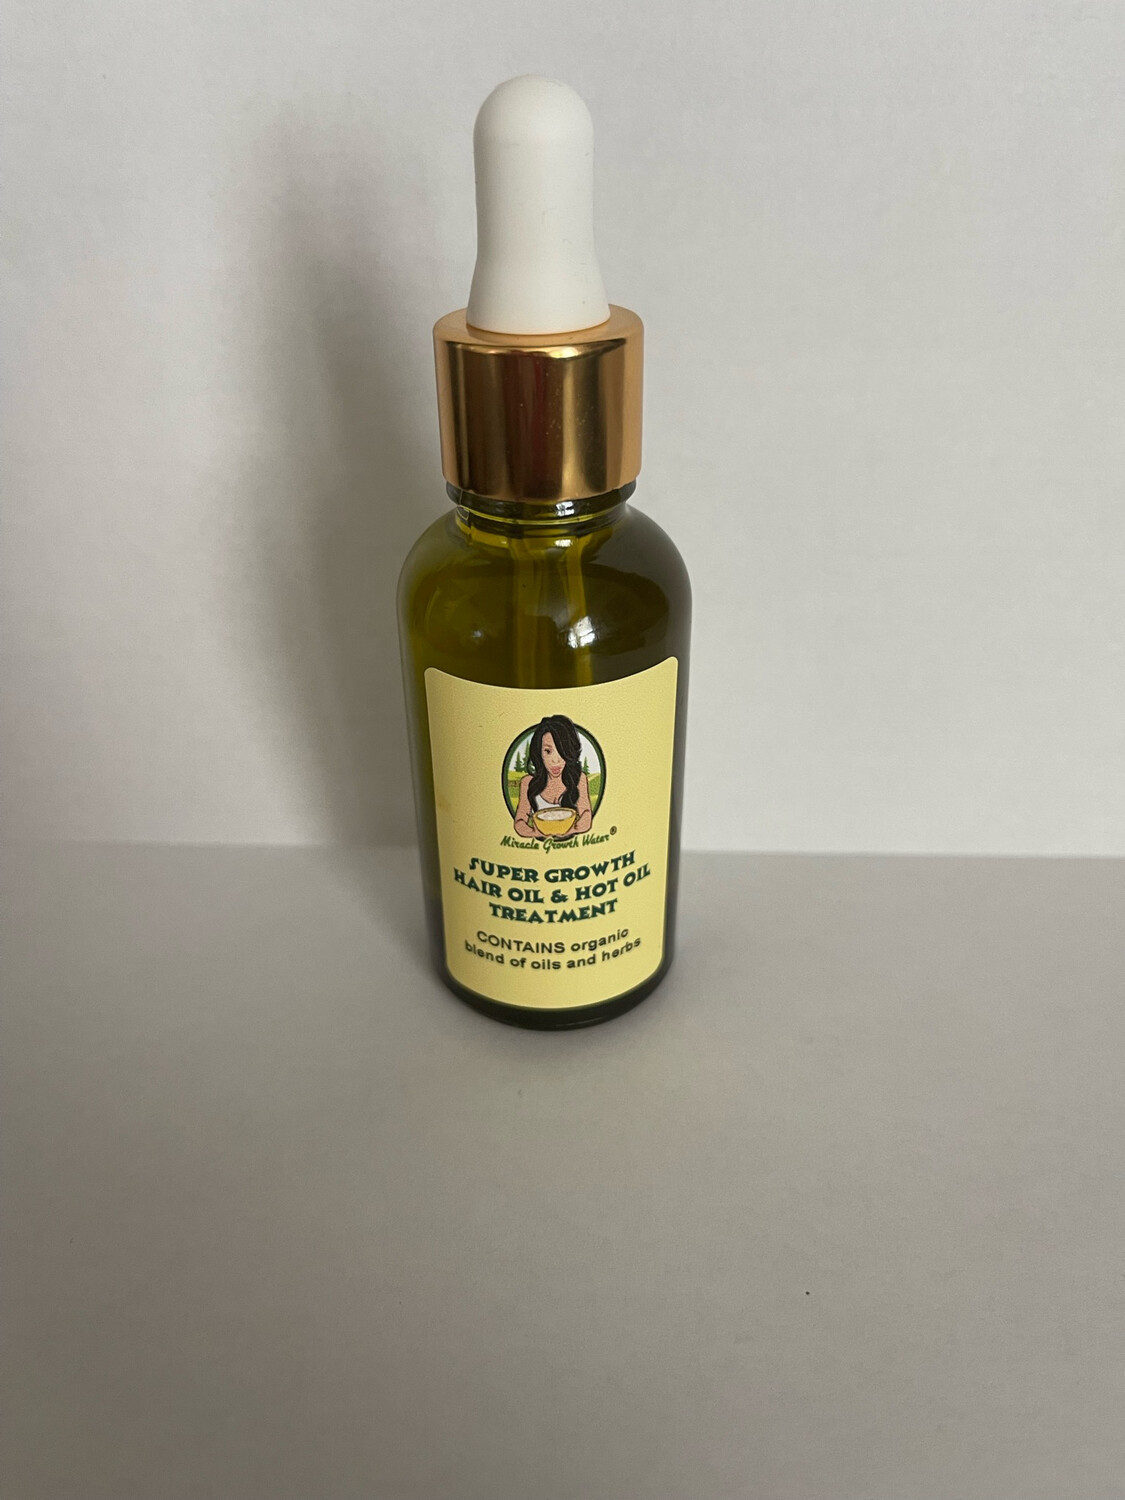 Super Growth Hair Oil & Hot Oil Treatment 2oz. Bottle